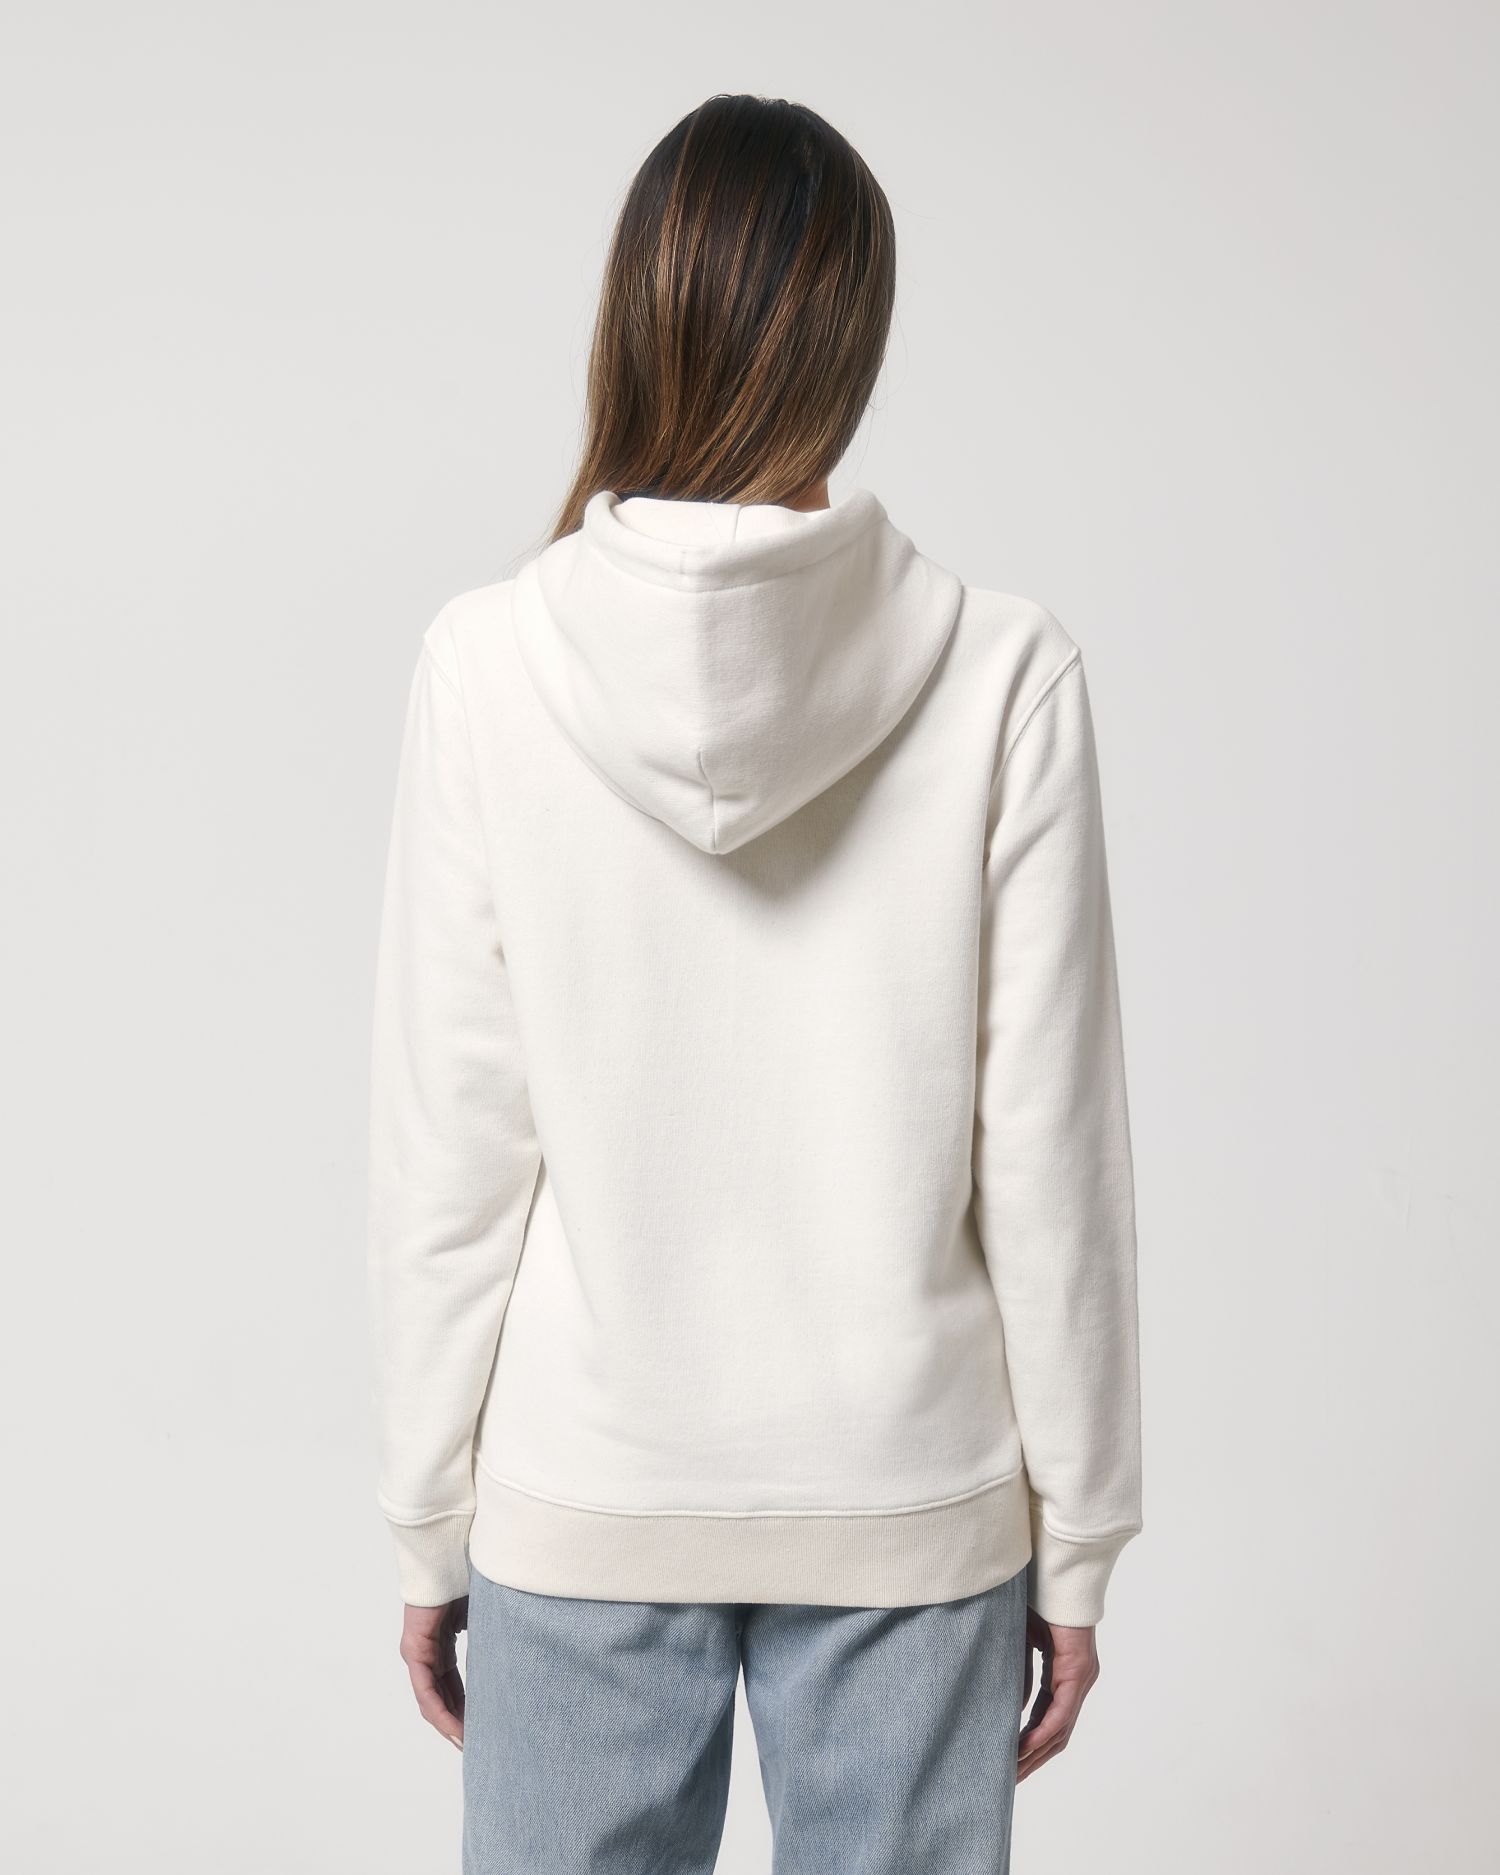 Hoodie sweatshirts RE-Cruiser in Farbe RE-White